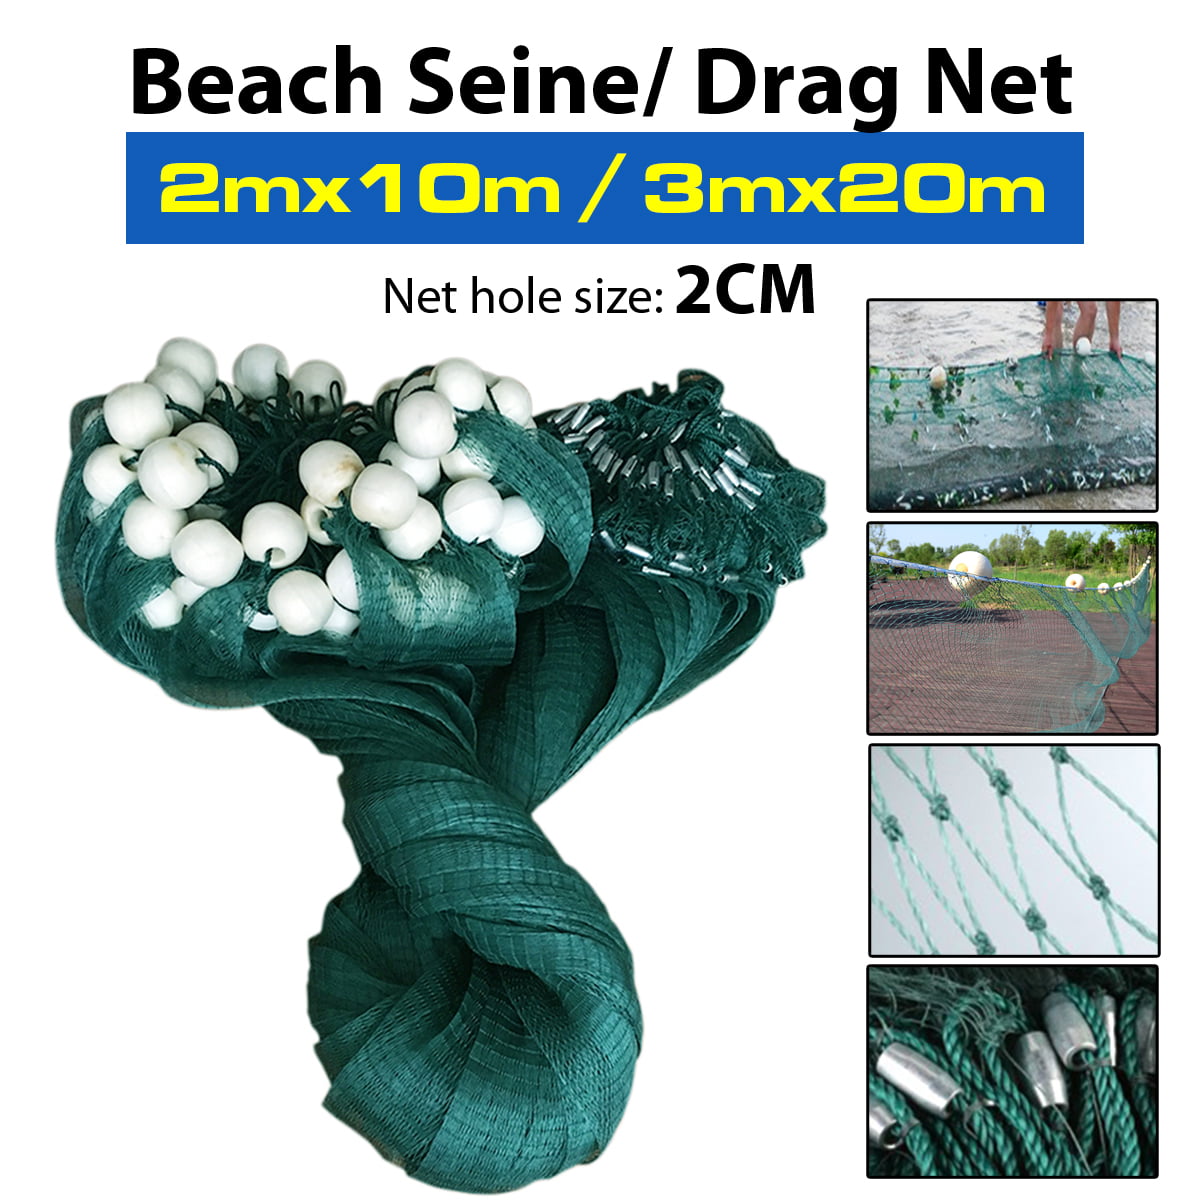 Details about   10x65FT Drag Net Beach Seine Bait Seine Mesh Fish Net Fishing  Polyethylene Net 